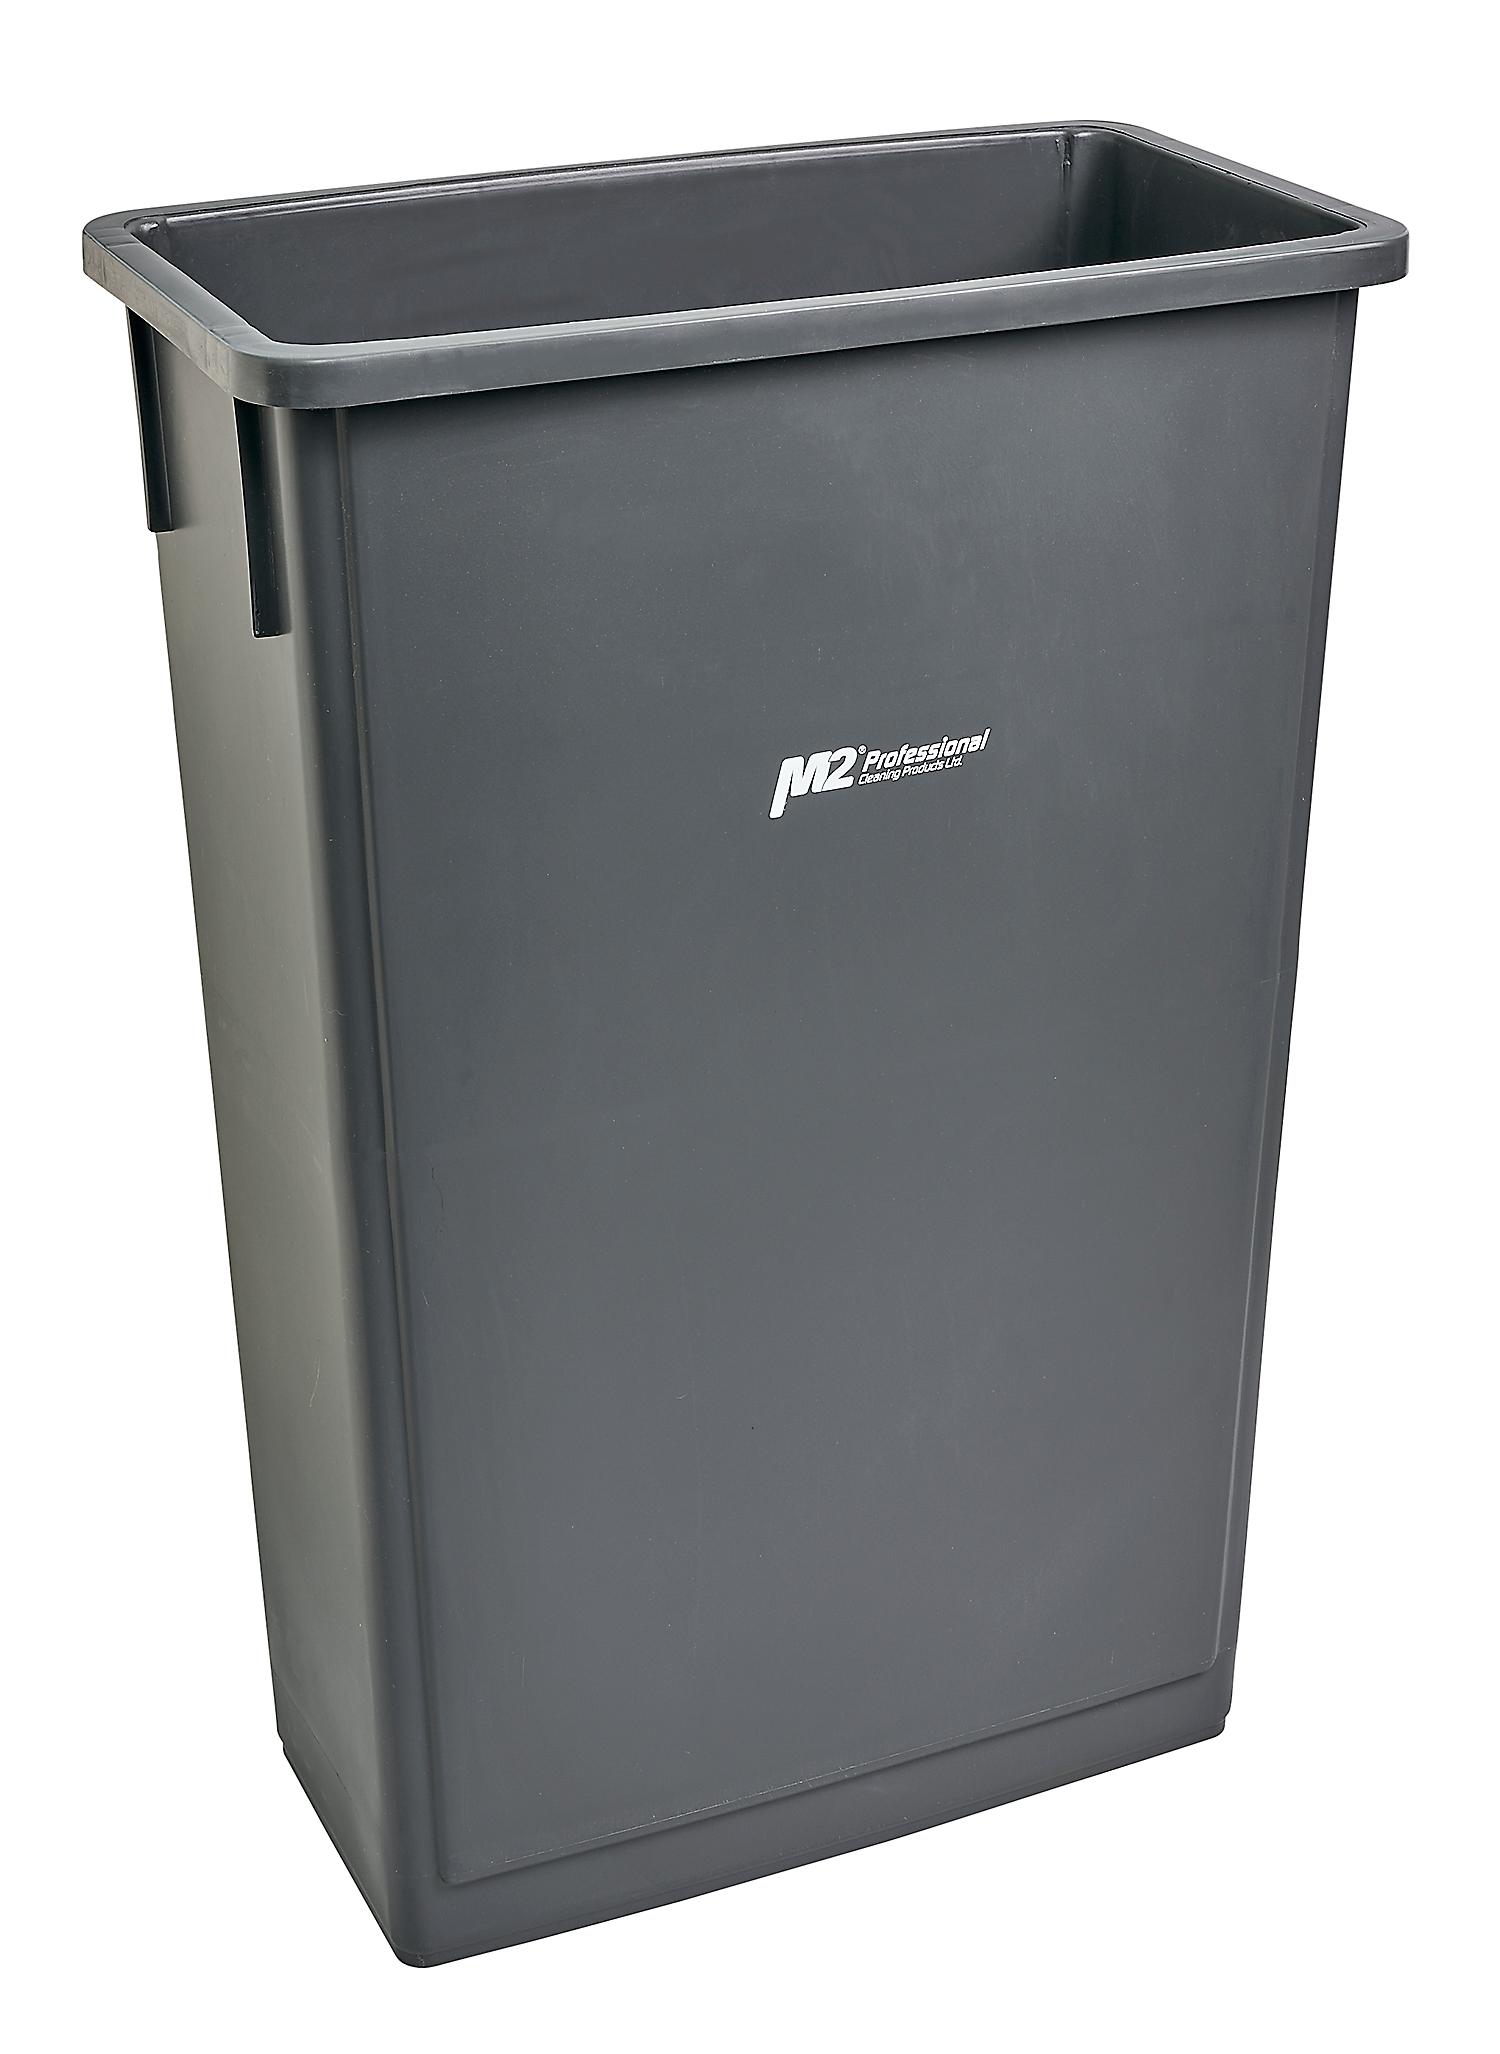 WM-PR2323-GY - 23gal Slim Garbage Container - Grey